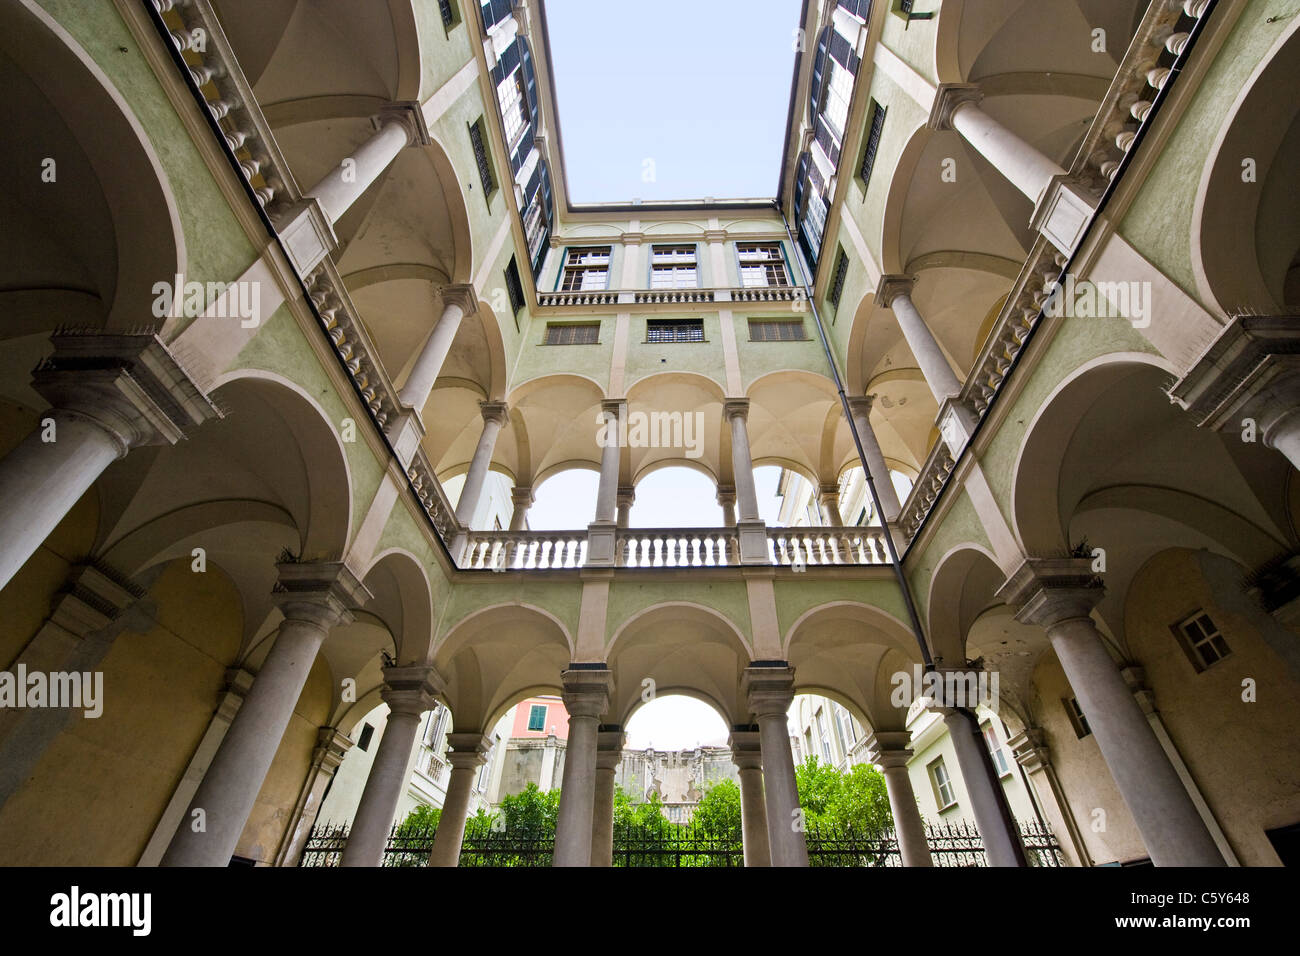 Balbi Senarega palace, Palazzo Balbi Senarega, Genova, liguria, Italy Foto Stock